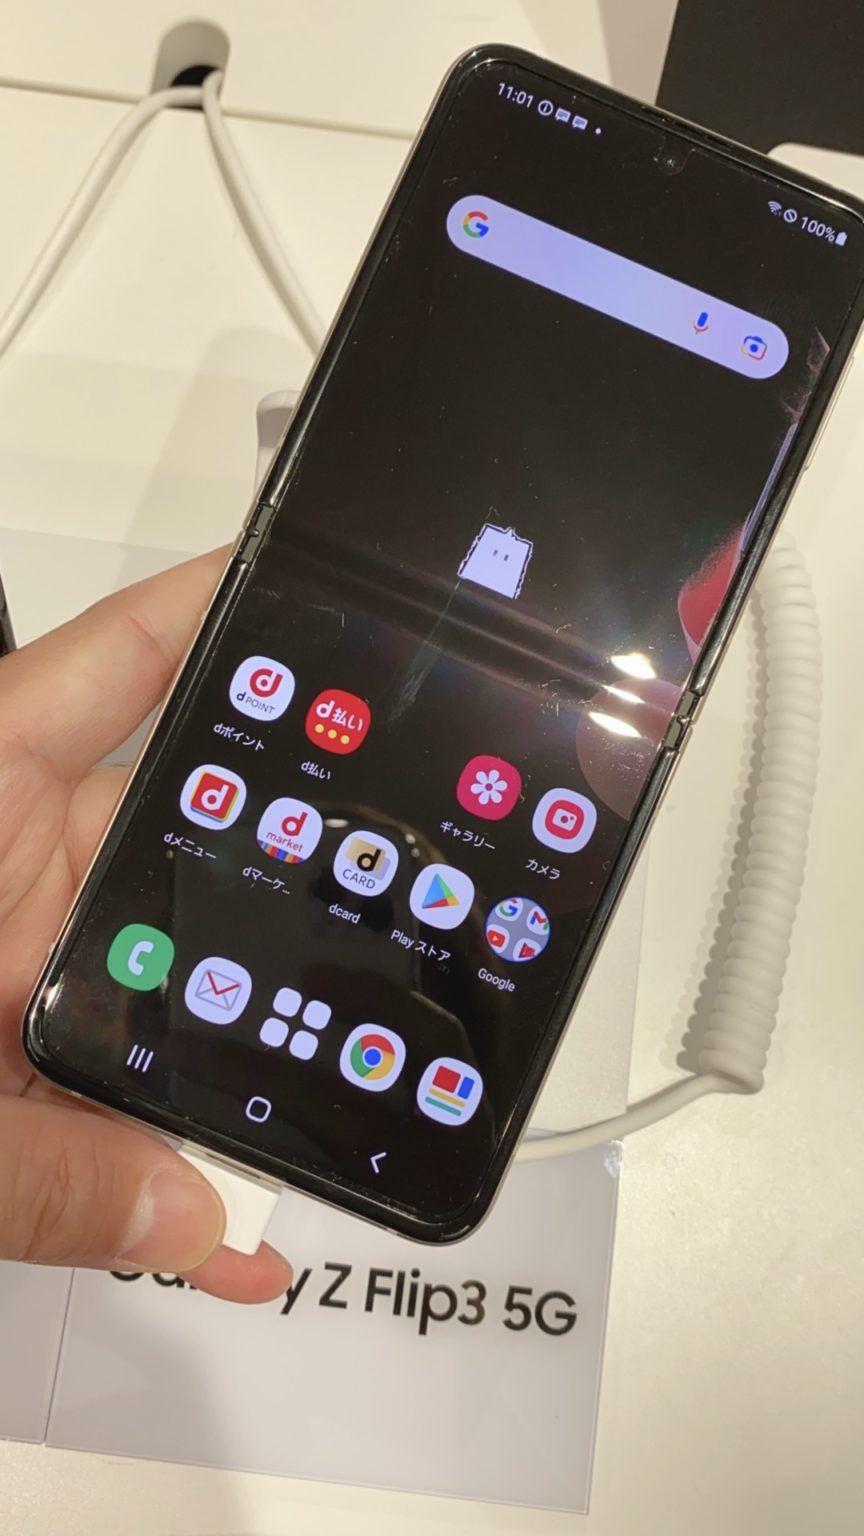 Galaxy Z Flip3 5Gのスペック・新機能・発売日等まとめ - iPhone大陸